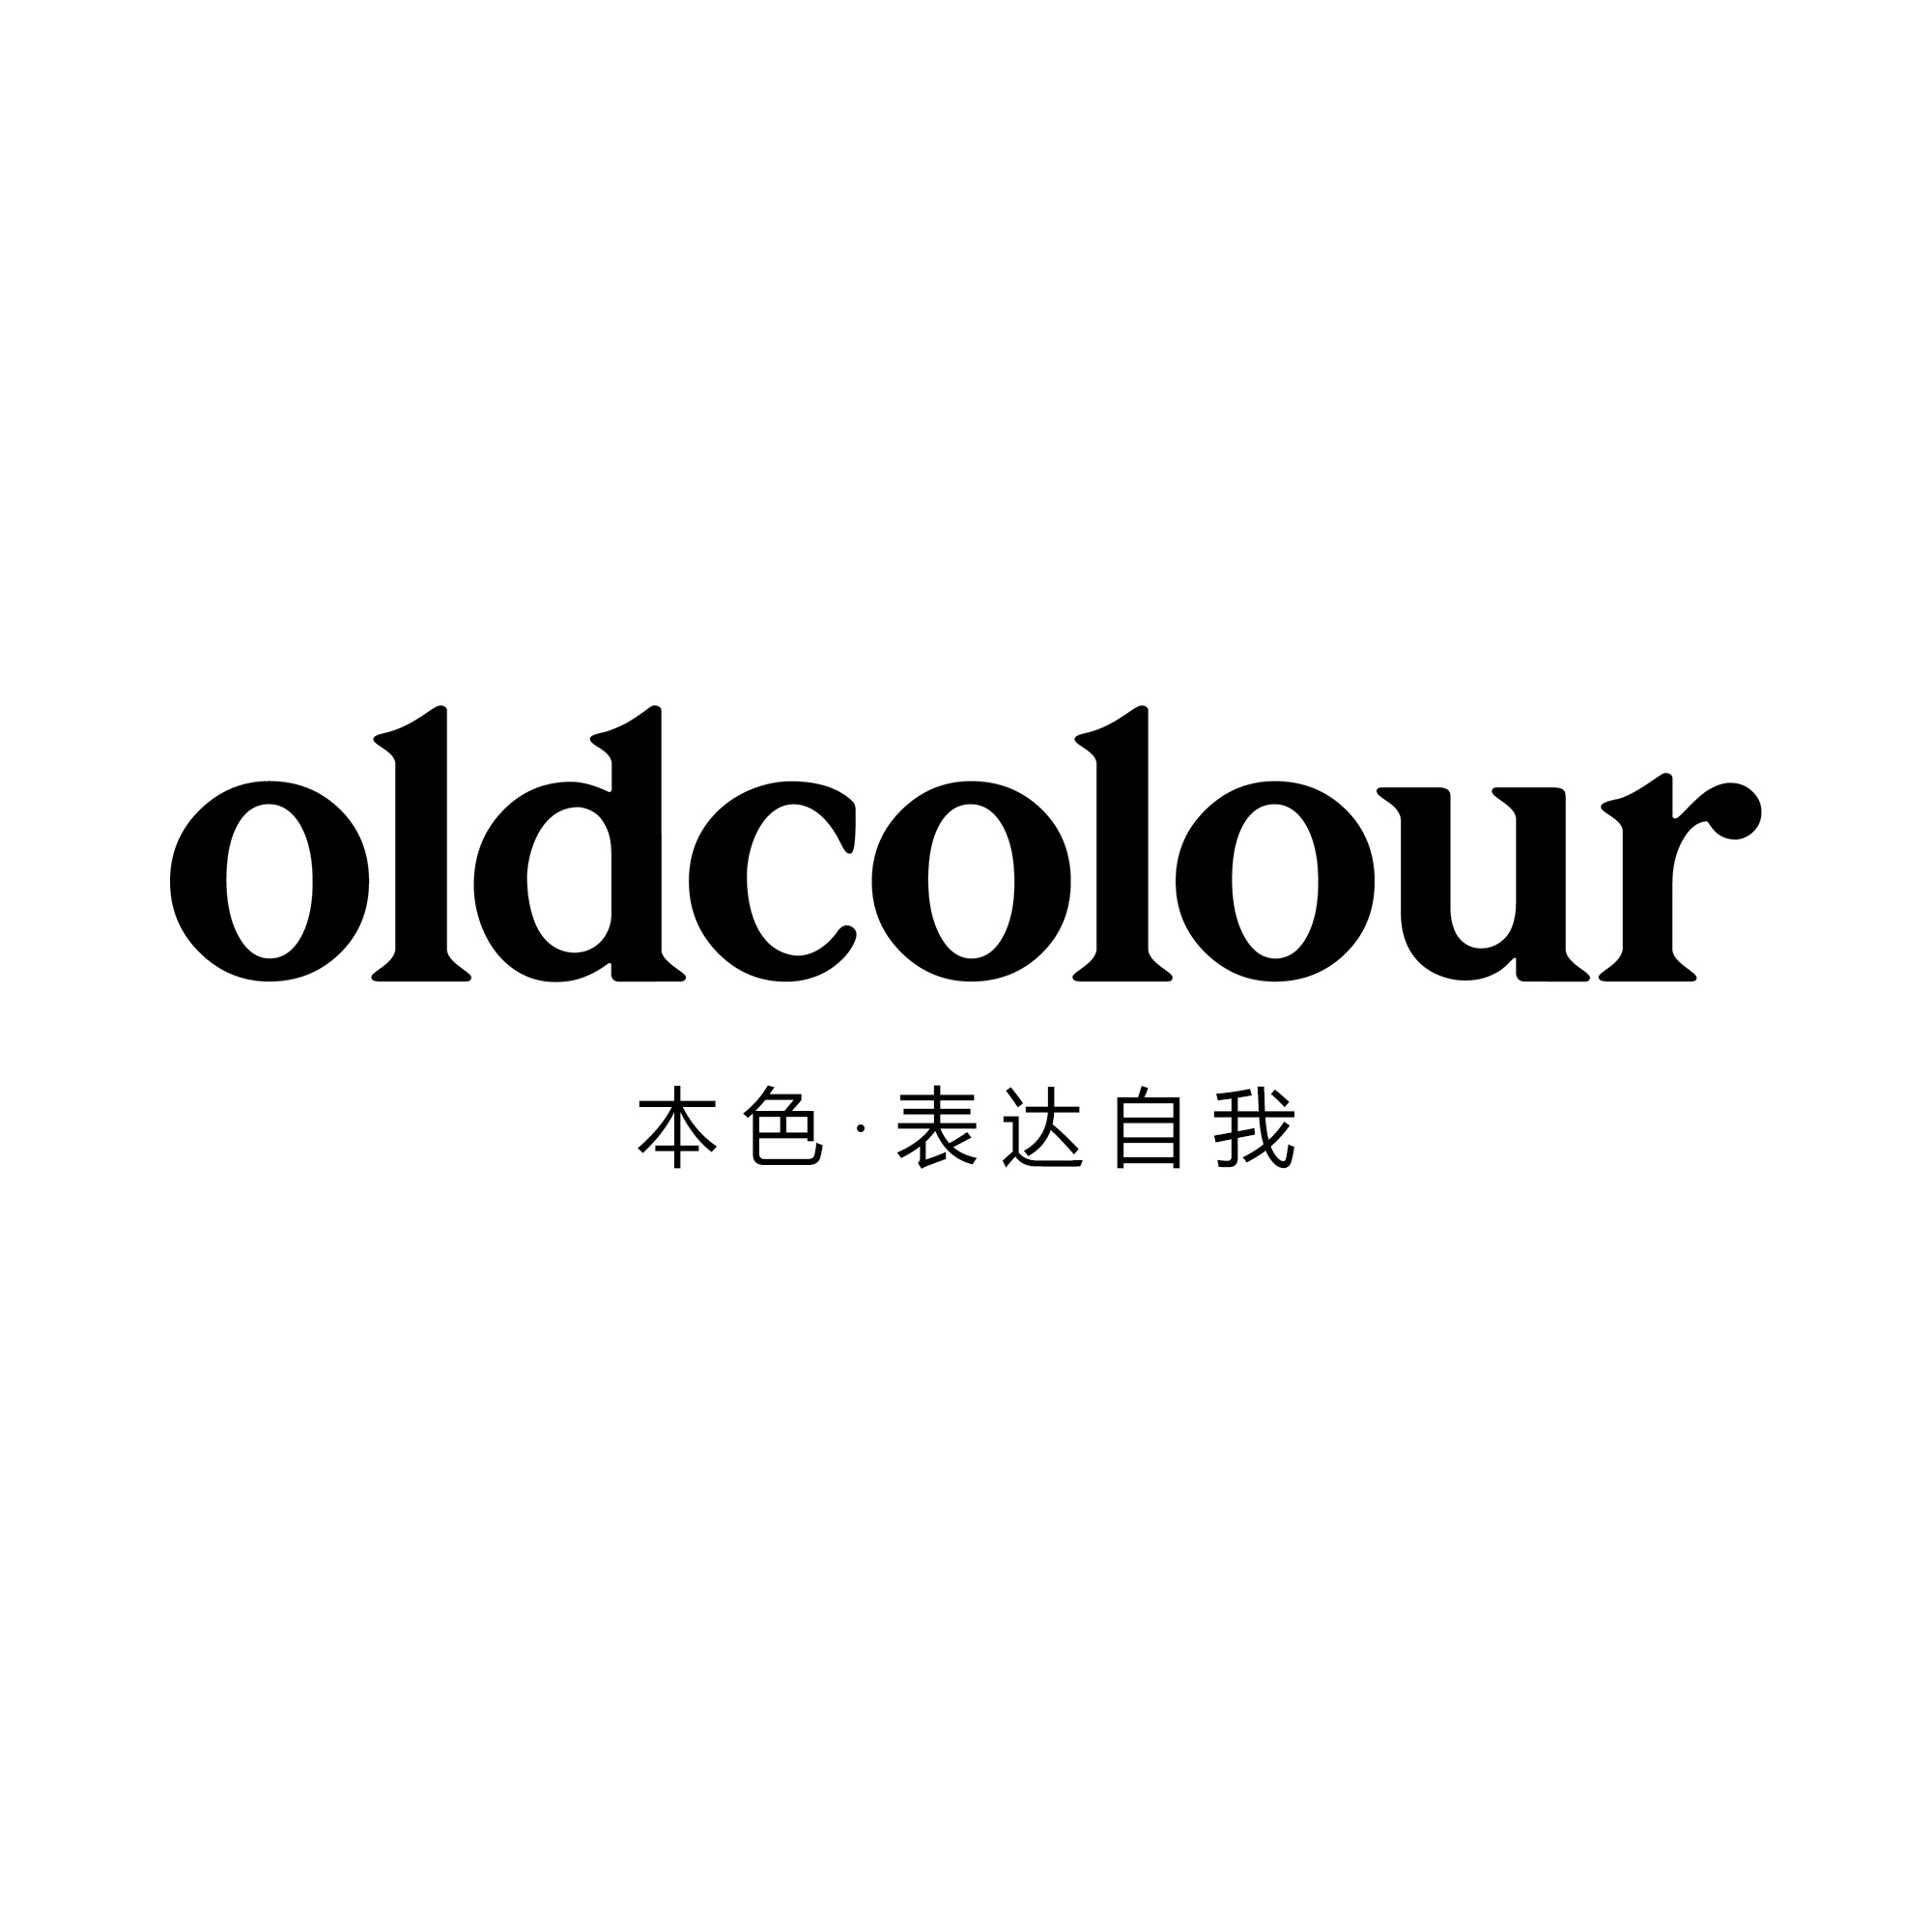 oldcolour